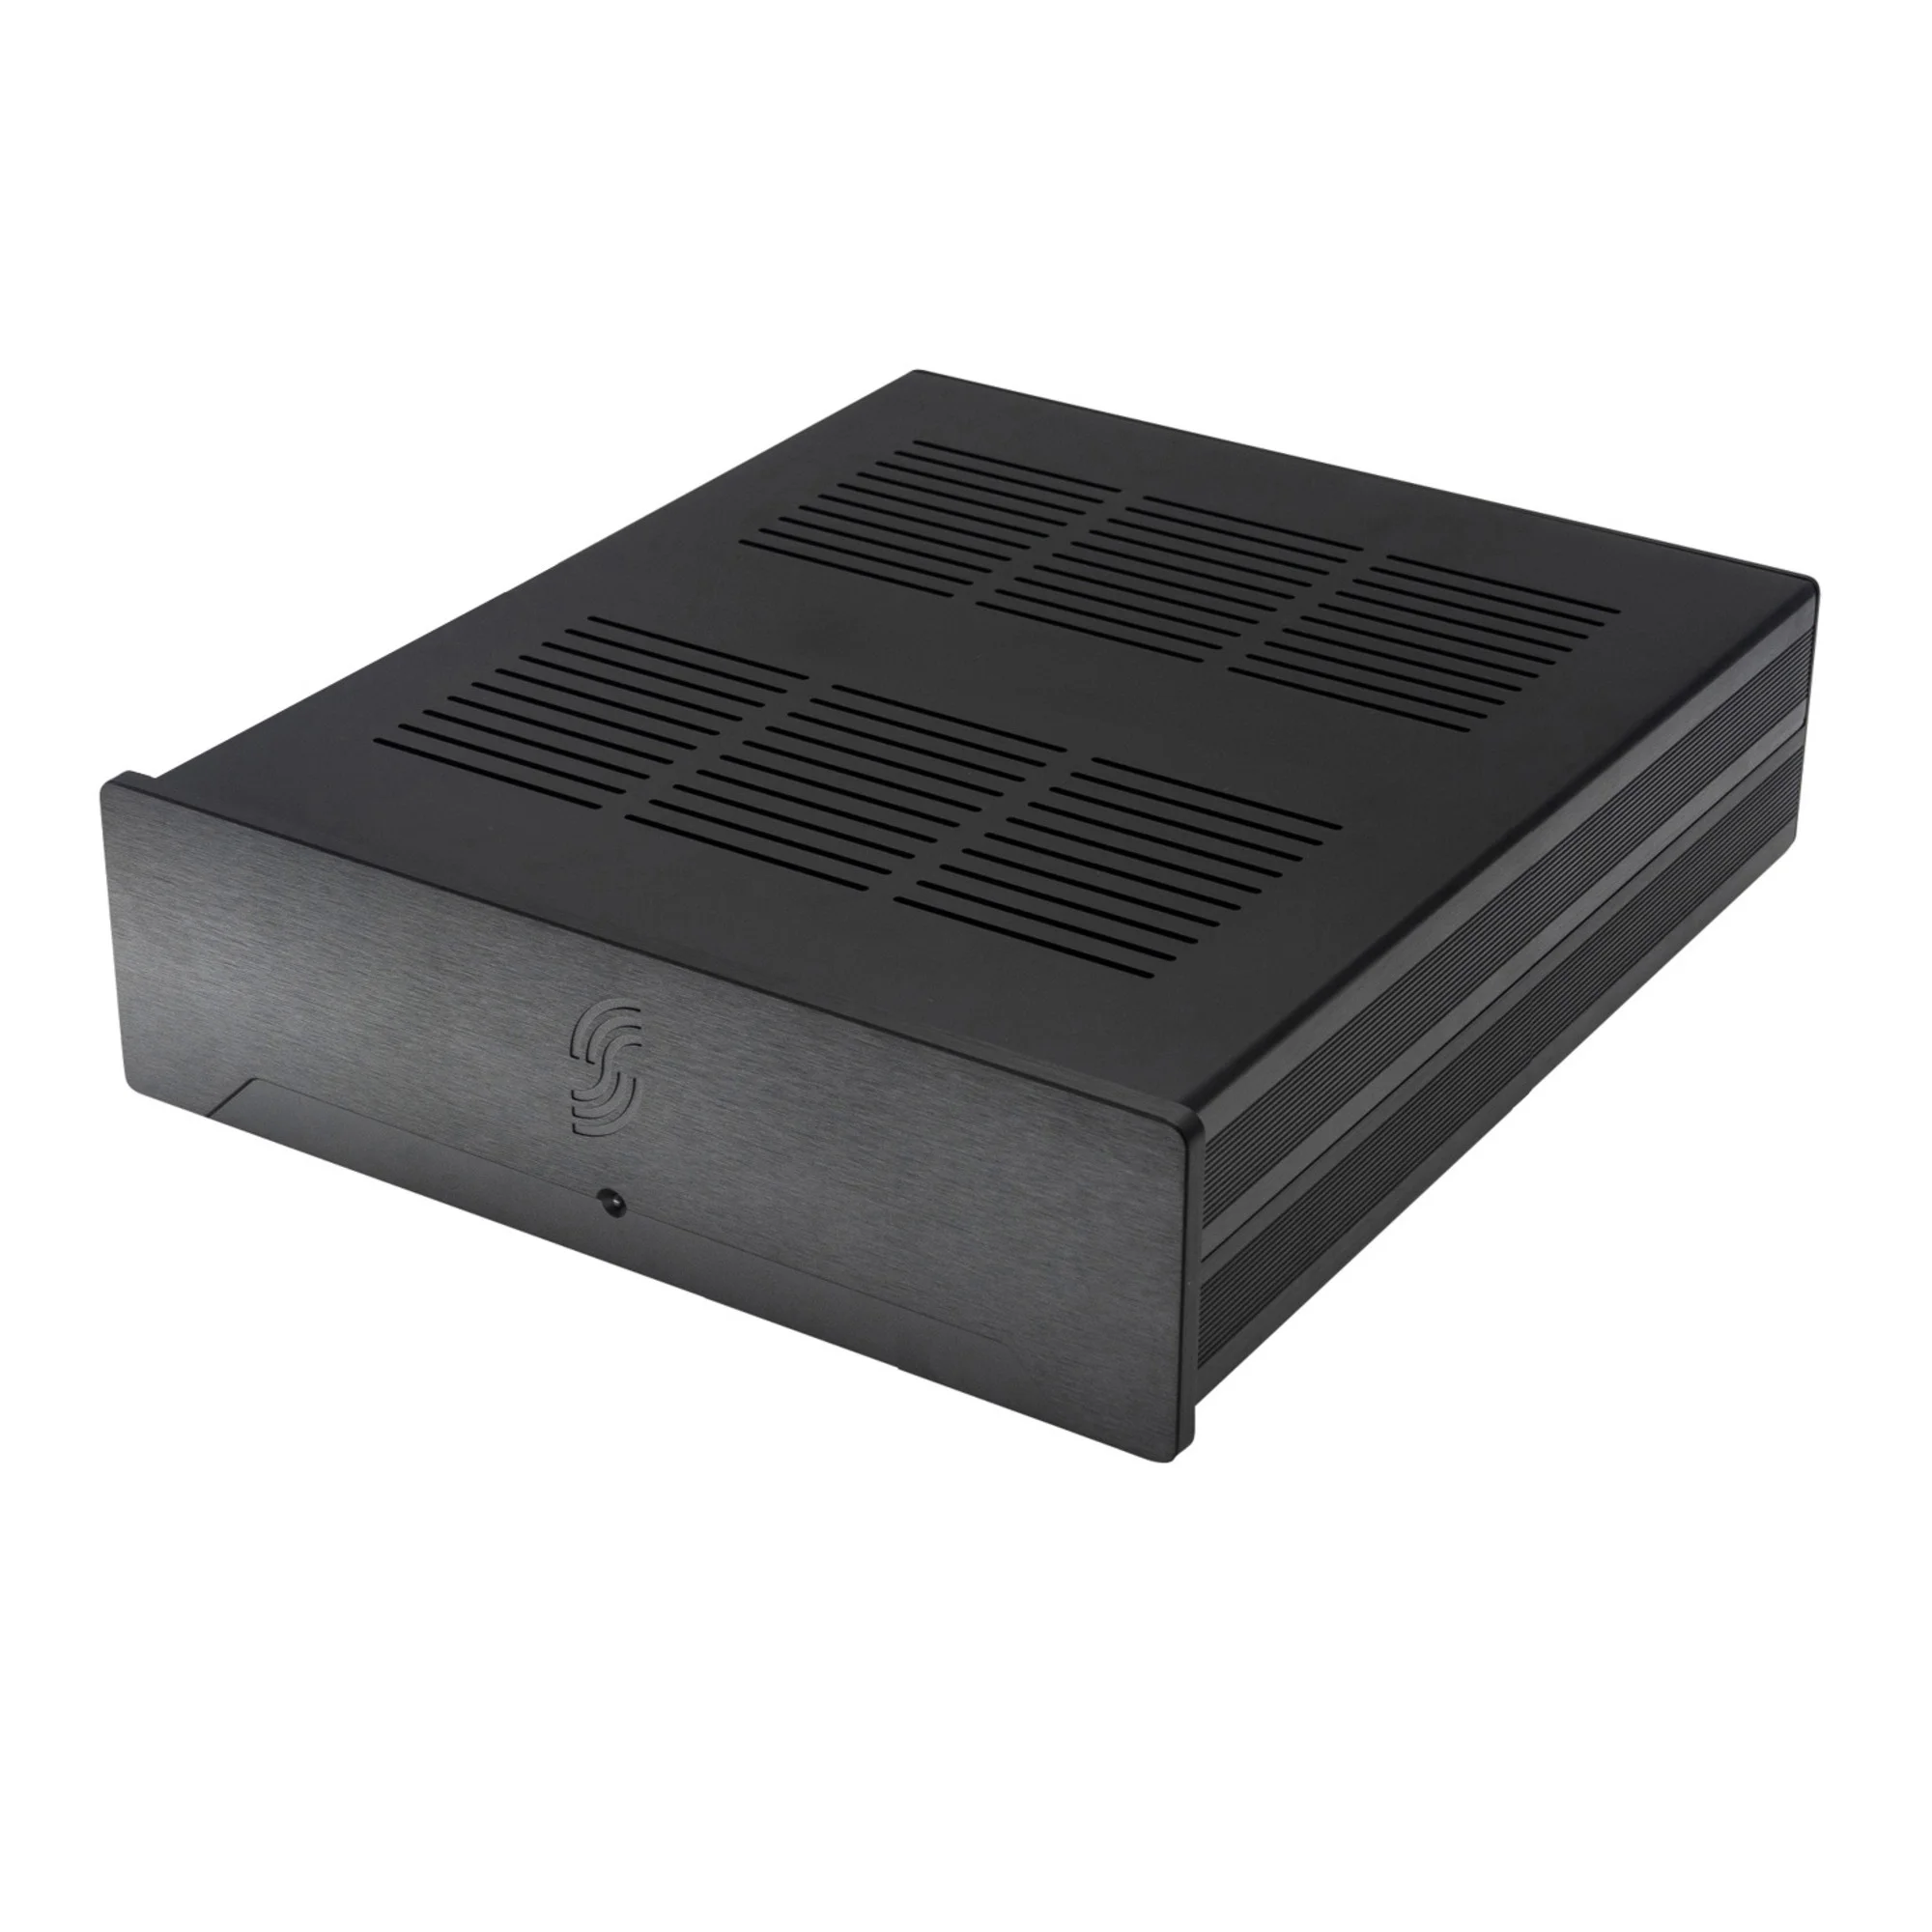 Amplificatoare de putere - Amplificator Quad 4x250W SoundImpress HY252-4CH, audioclub.ro